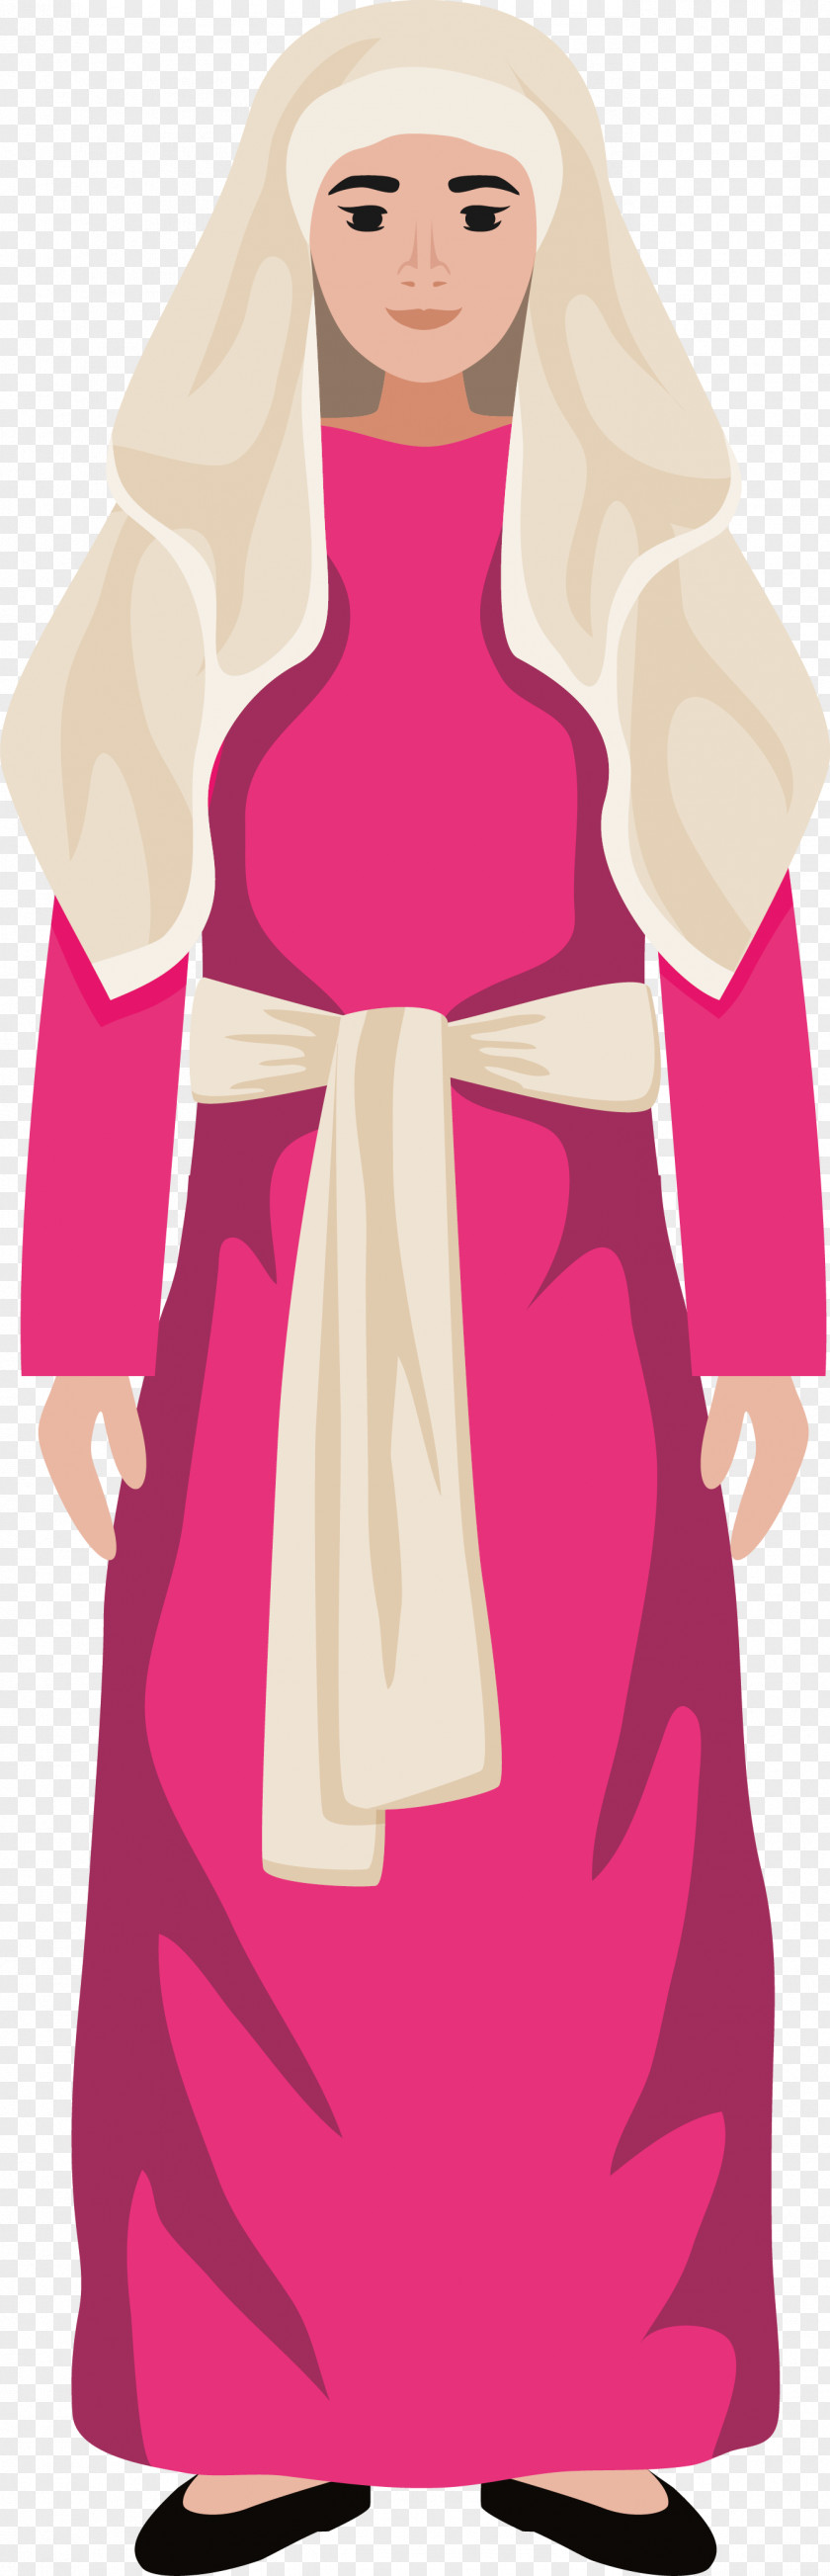 Human Hair Color Clothing Character Pink M PNG